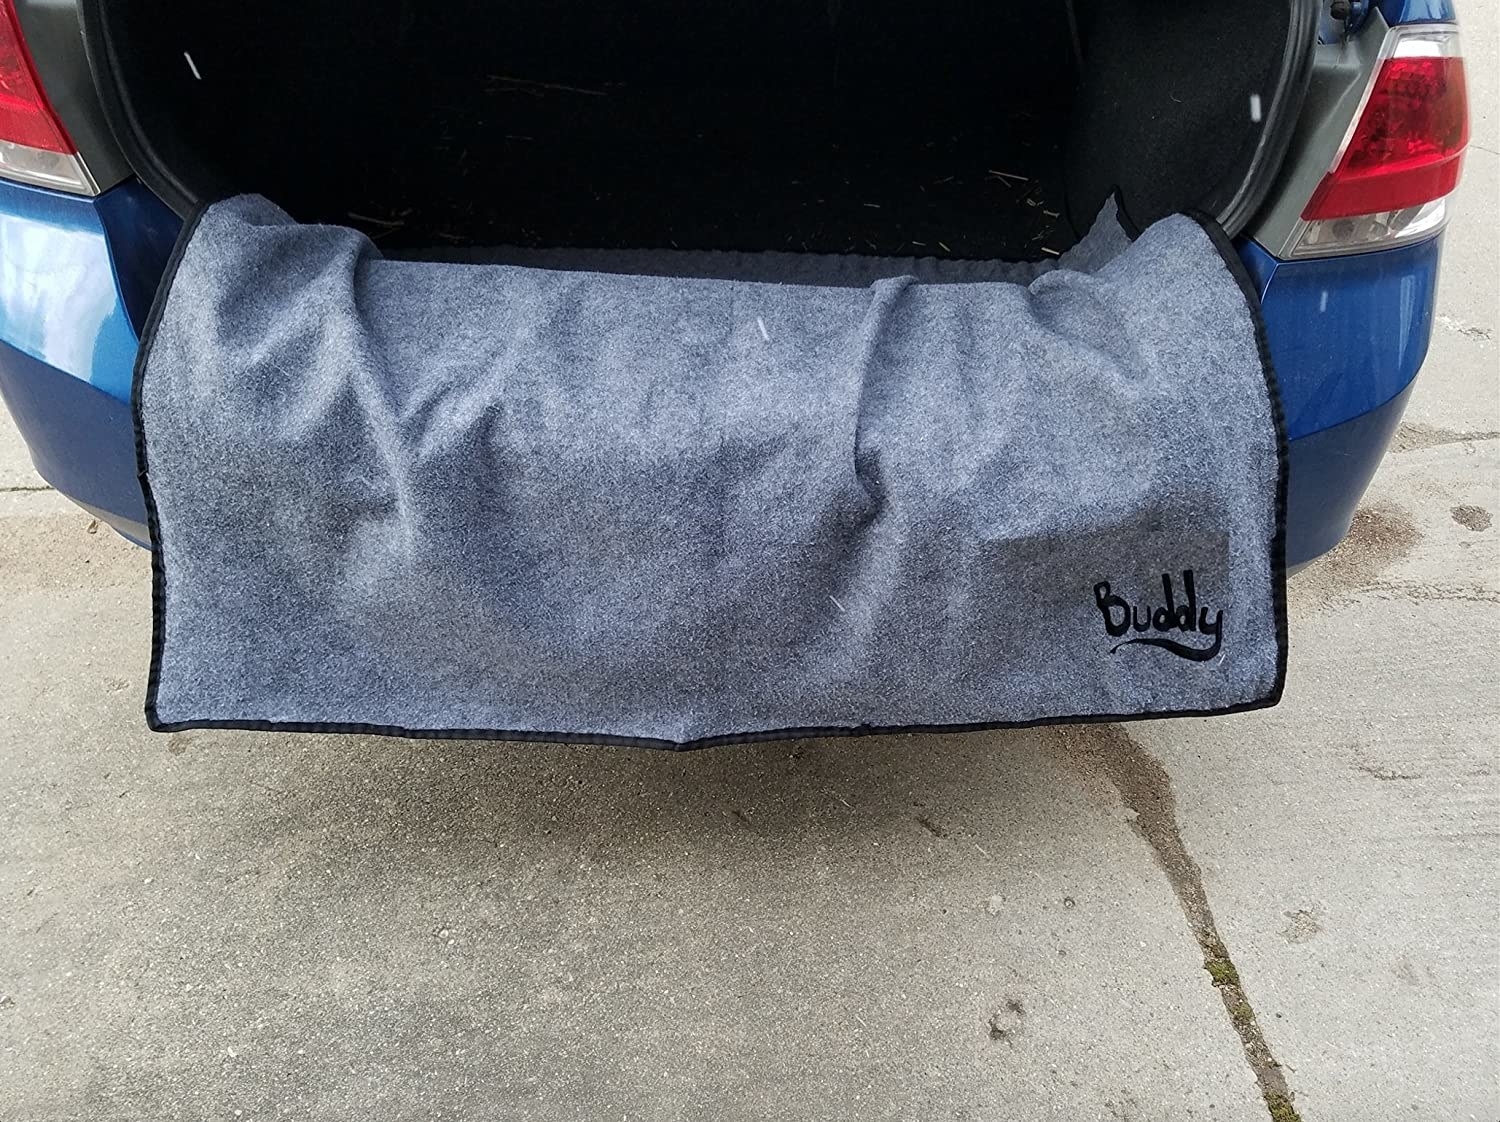 Gray fabric bumper protector covering bumper of car